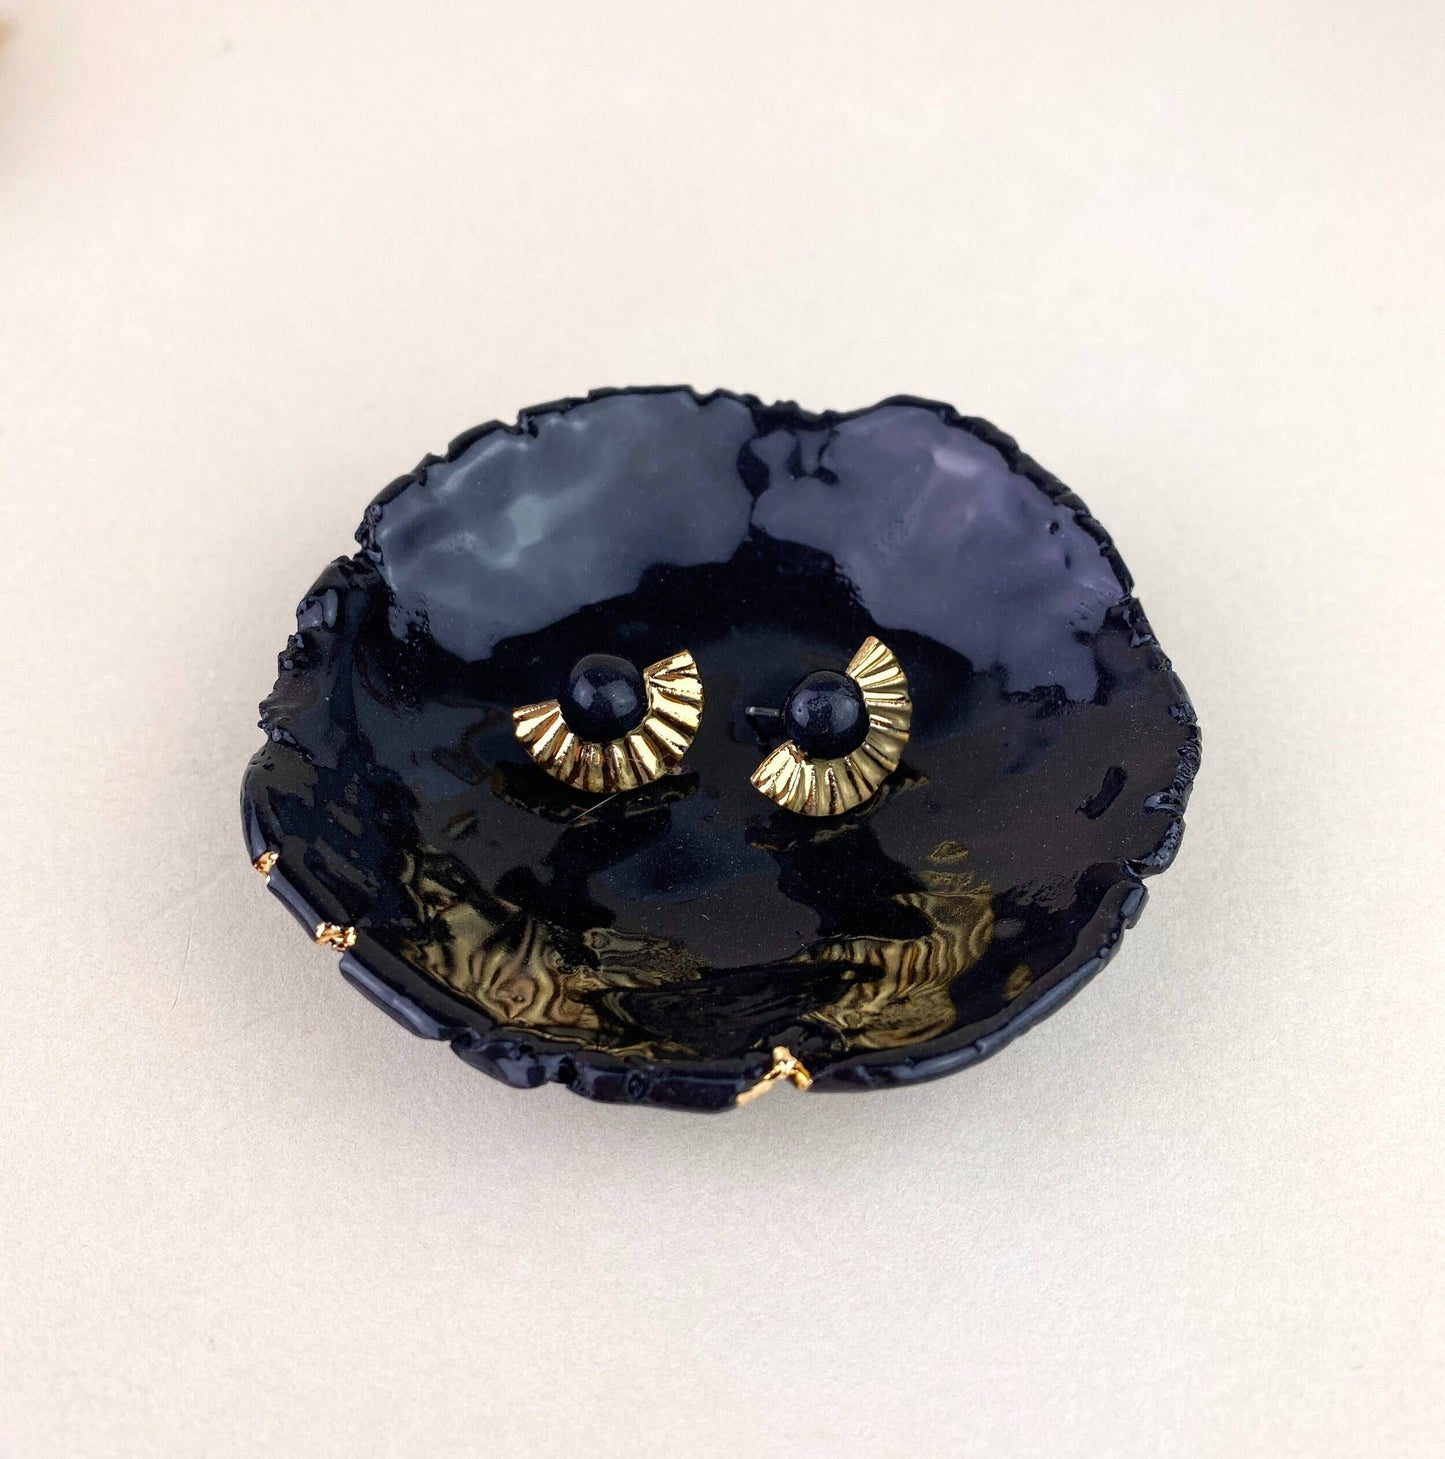 Gold Fan Studs - Black Porcelain with 22k Gold Overlay